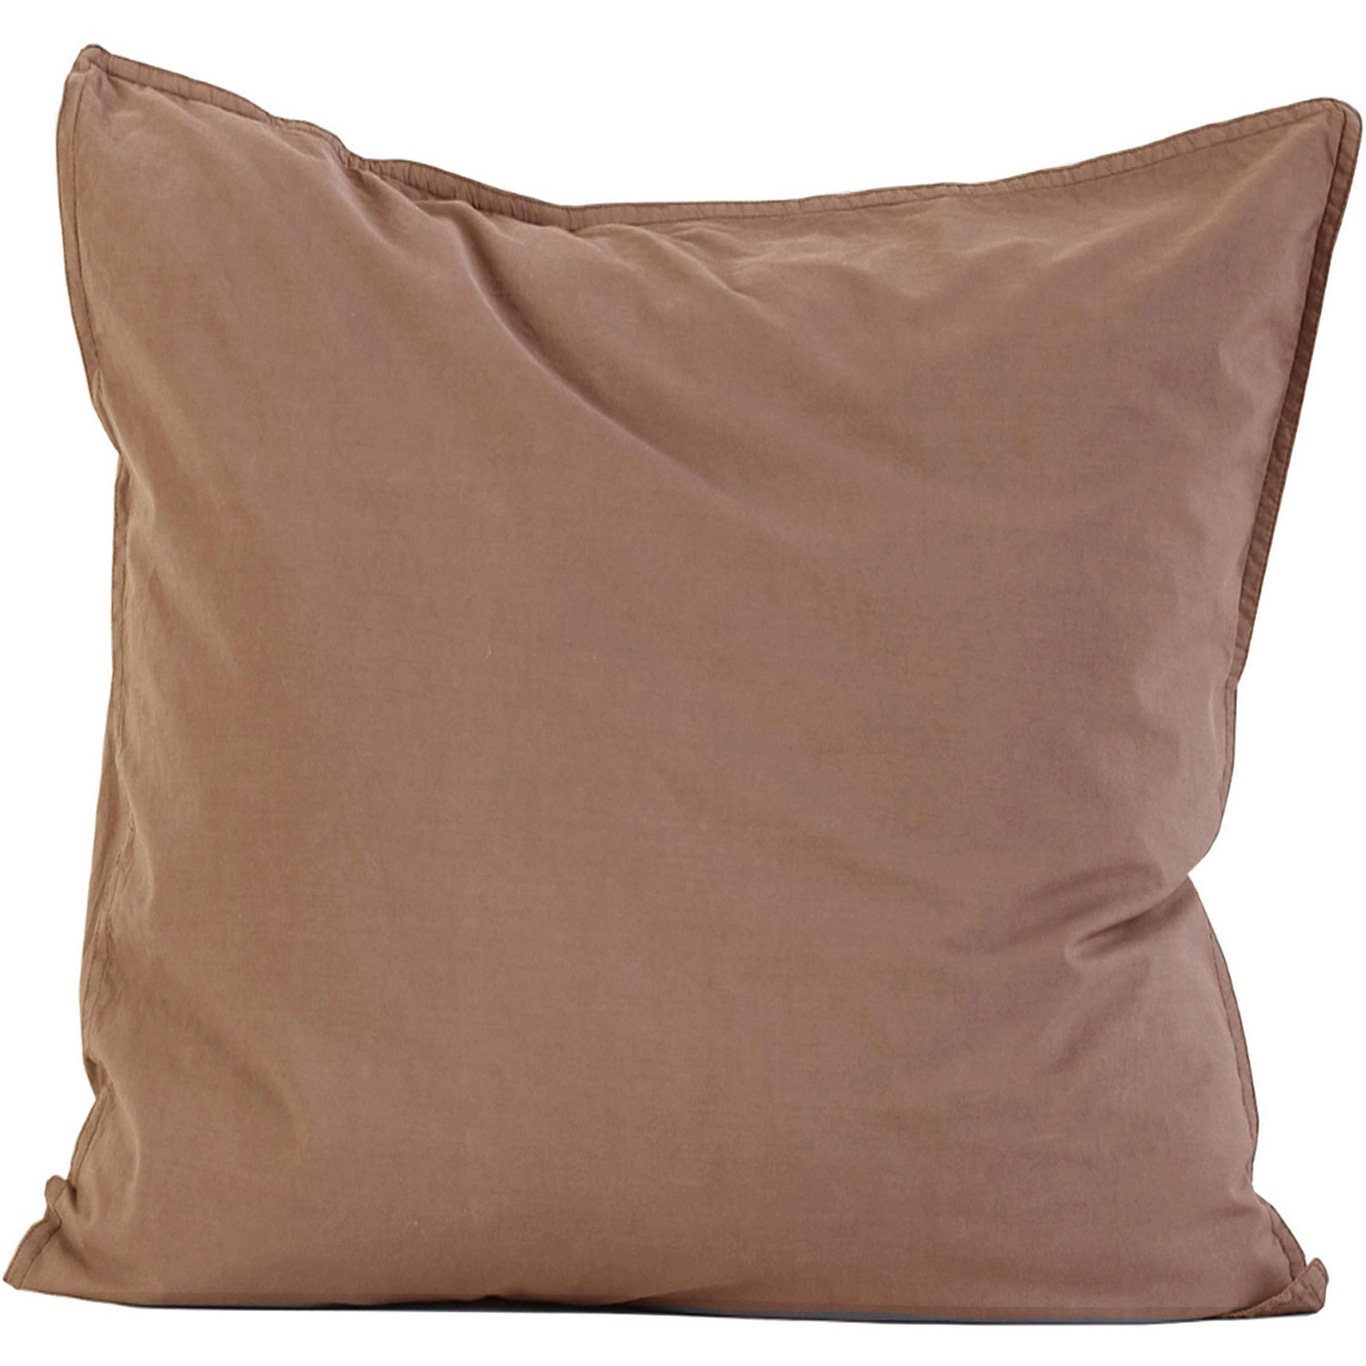 Pillowcase Organic Cotton 65x65 cm 2-pack, Tan